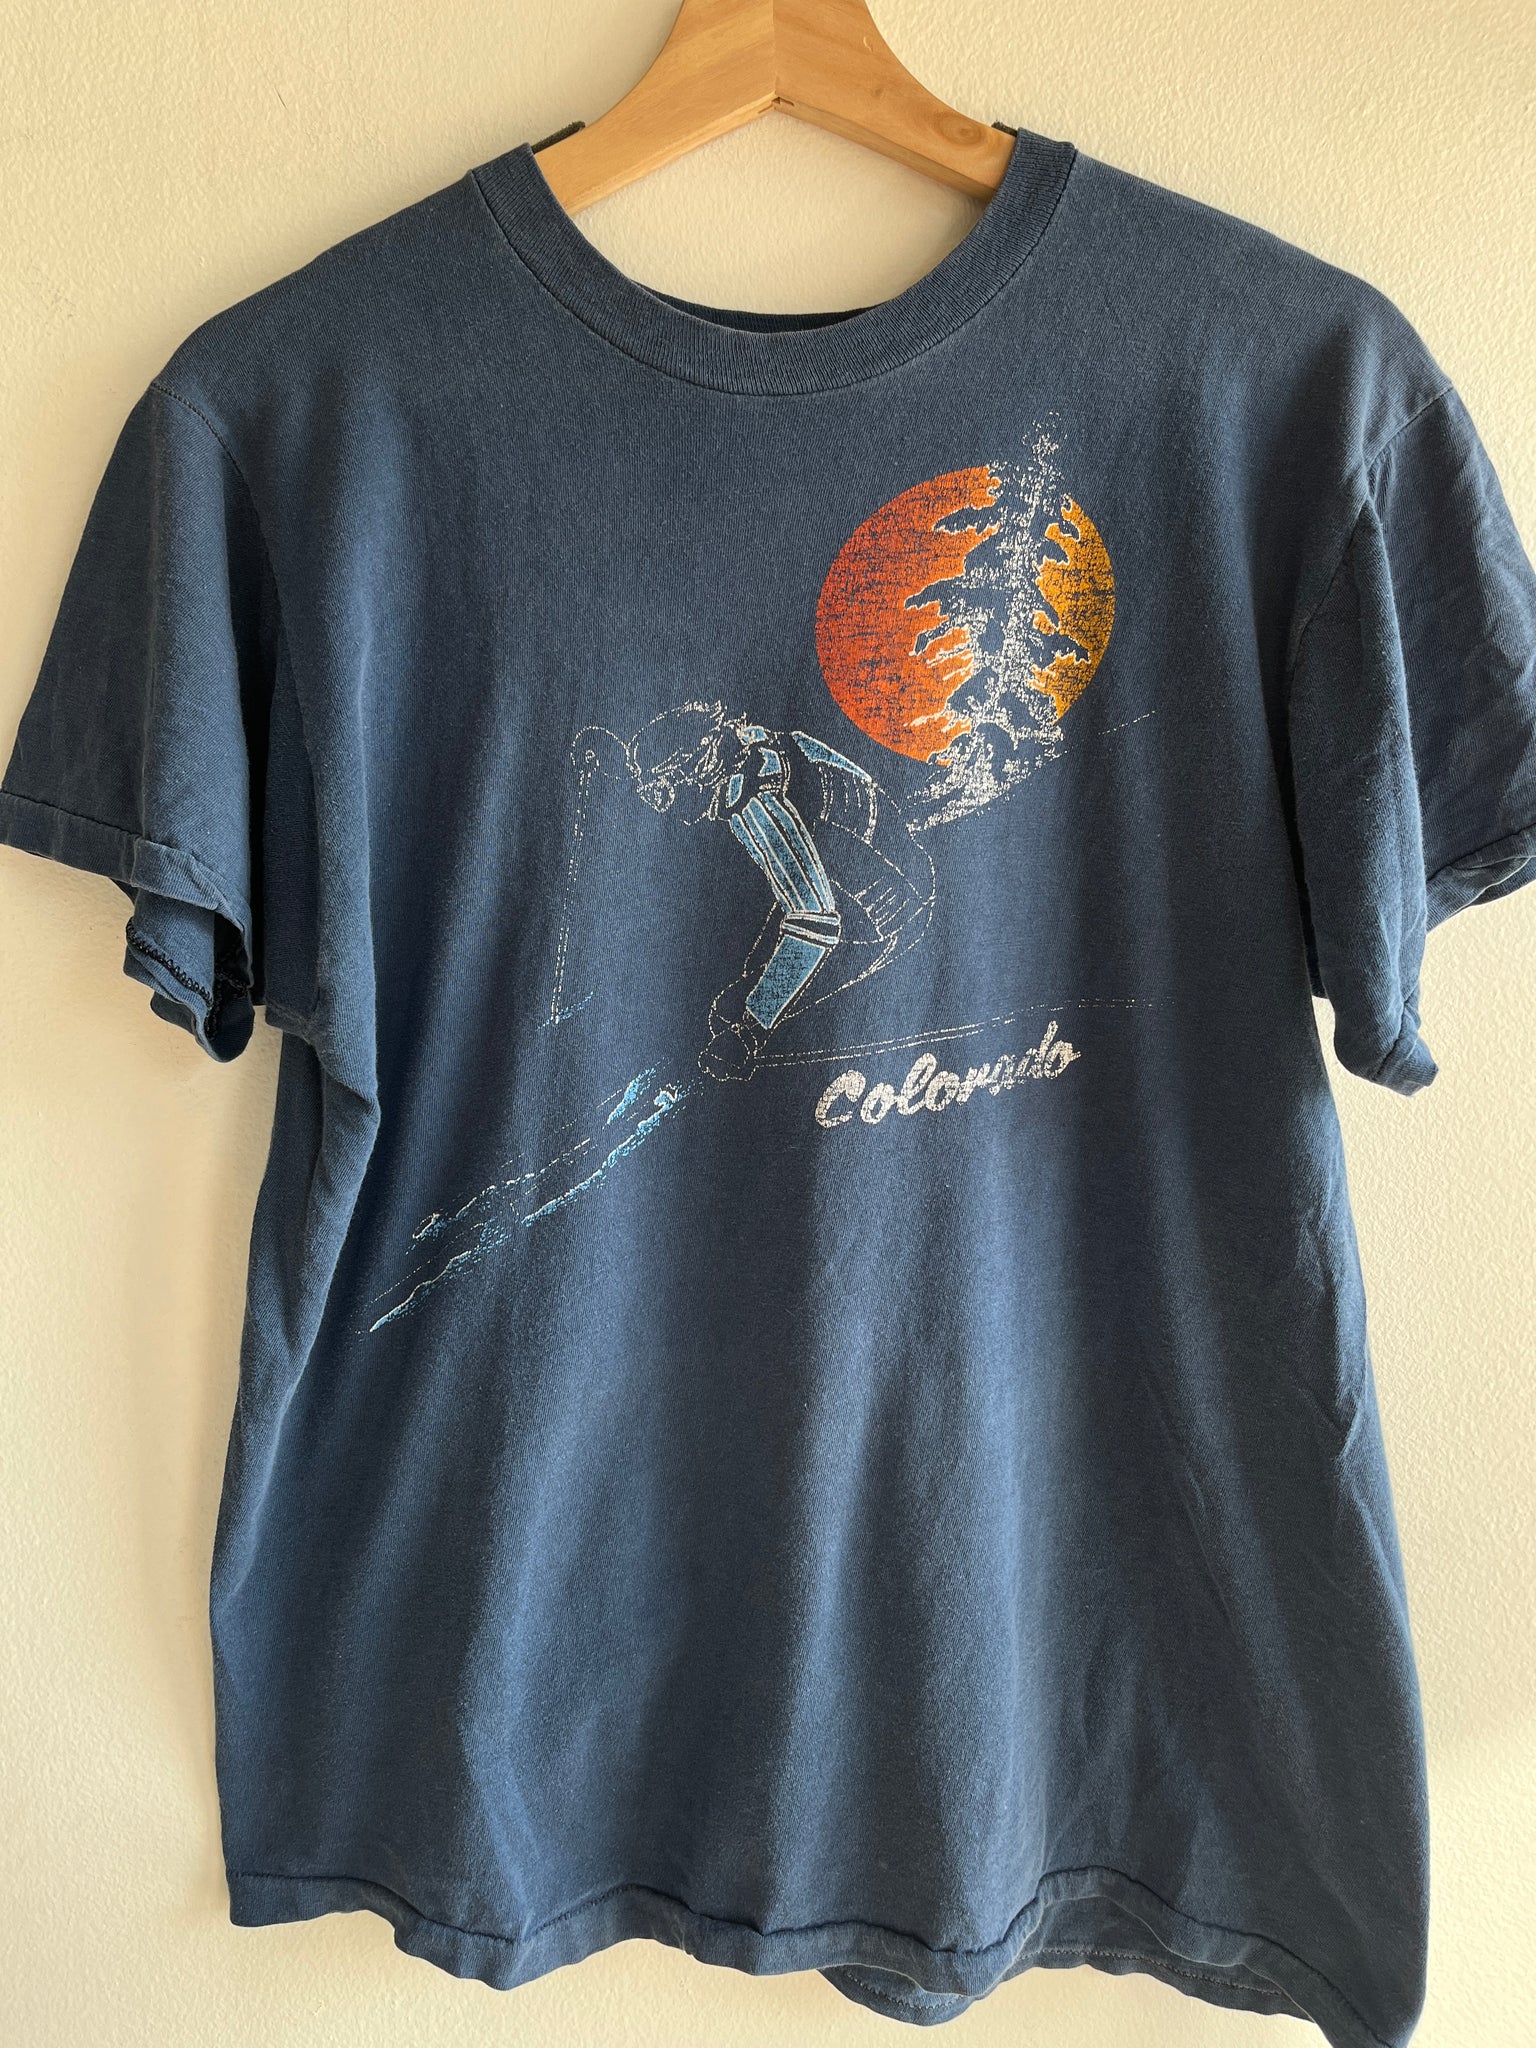 Vintage 1970’s Colorado Skiing T-Shirt